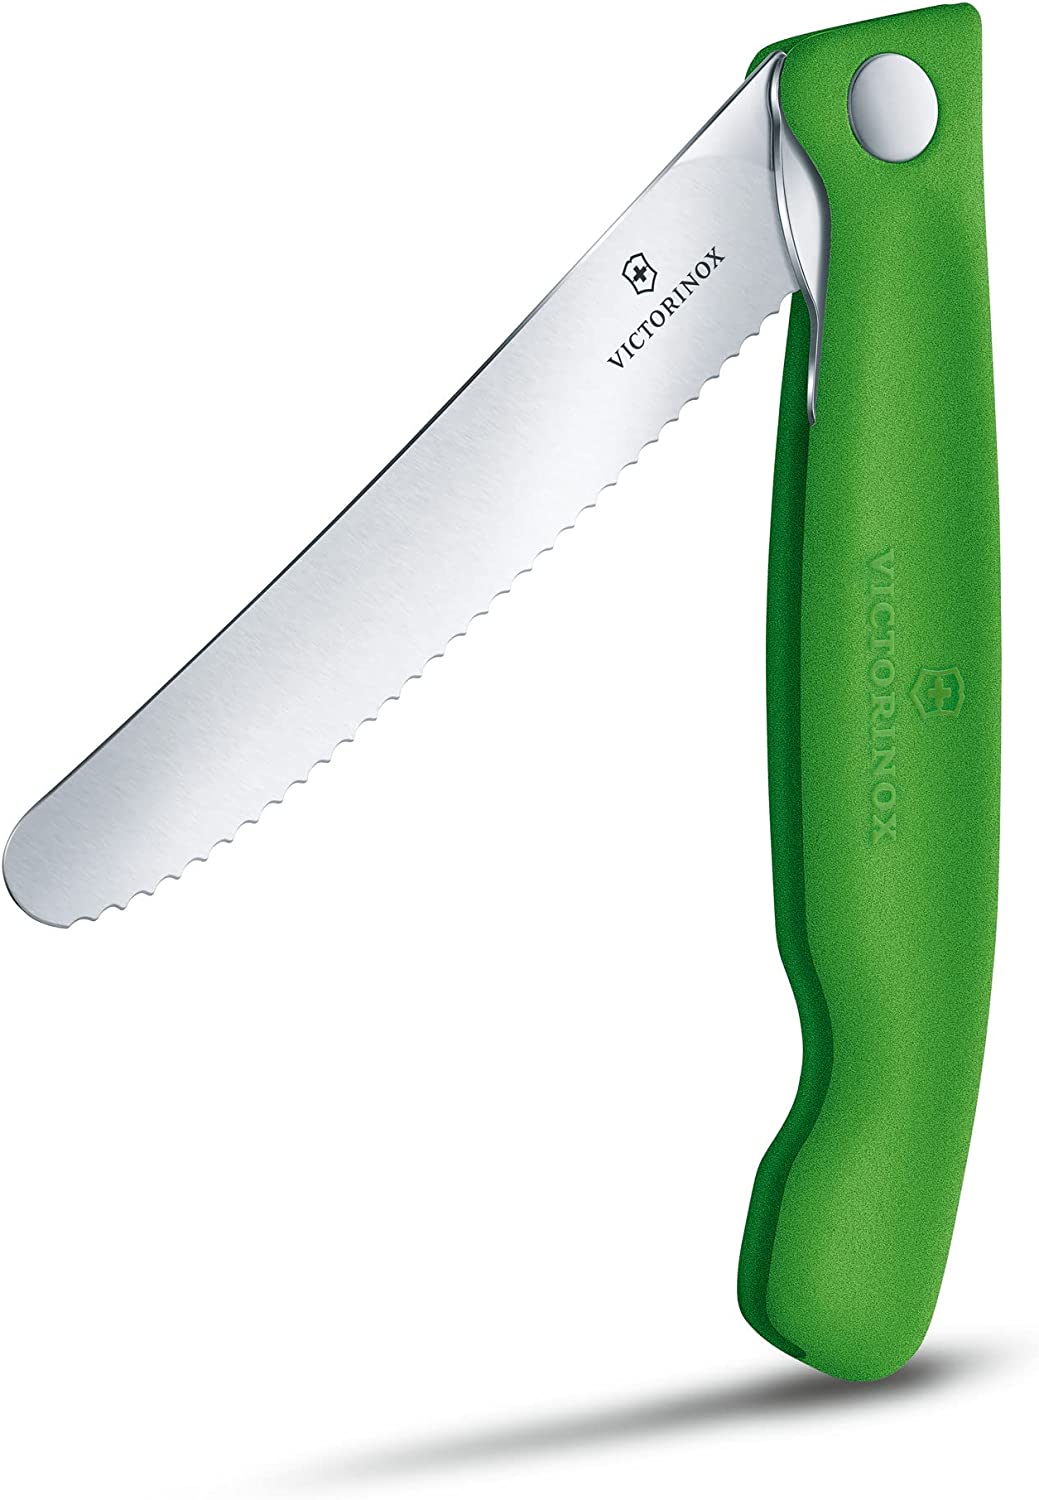 Victorinox Swiss Classic Spear Point Straight Edge Paring Knife, Green, 3.25